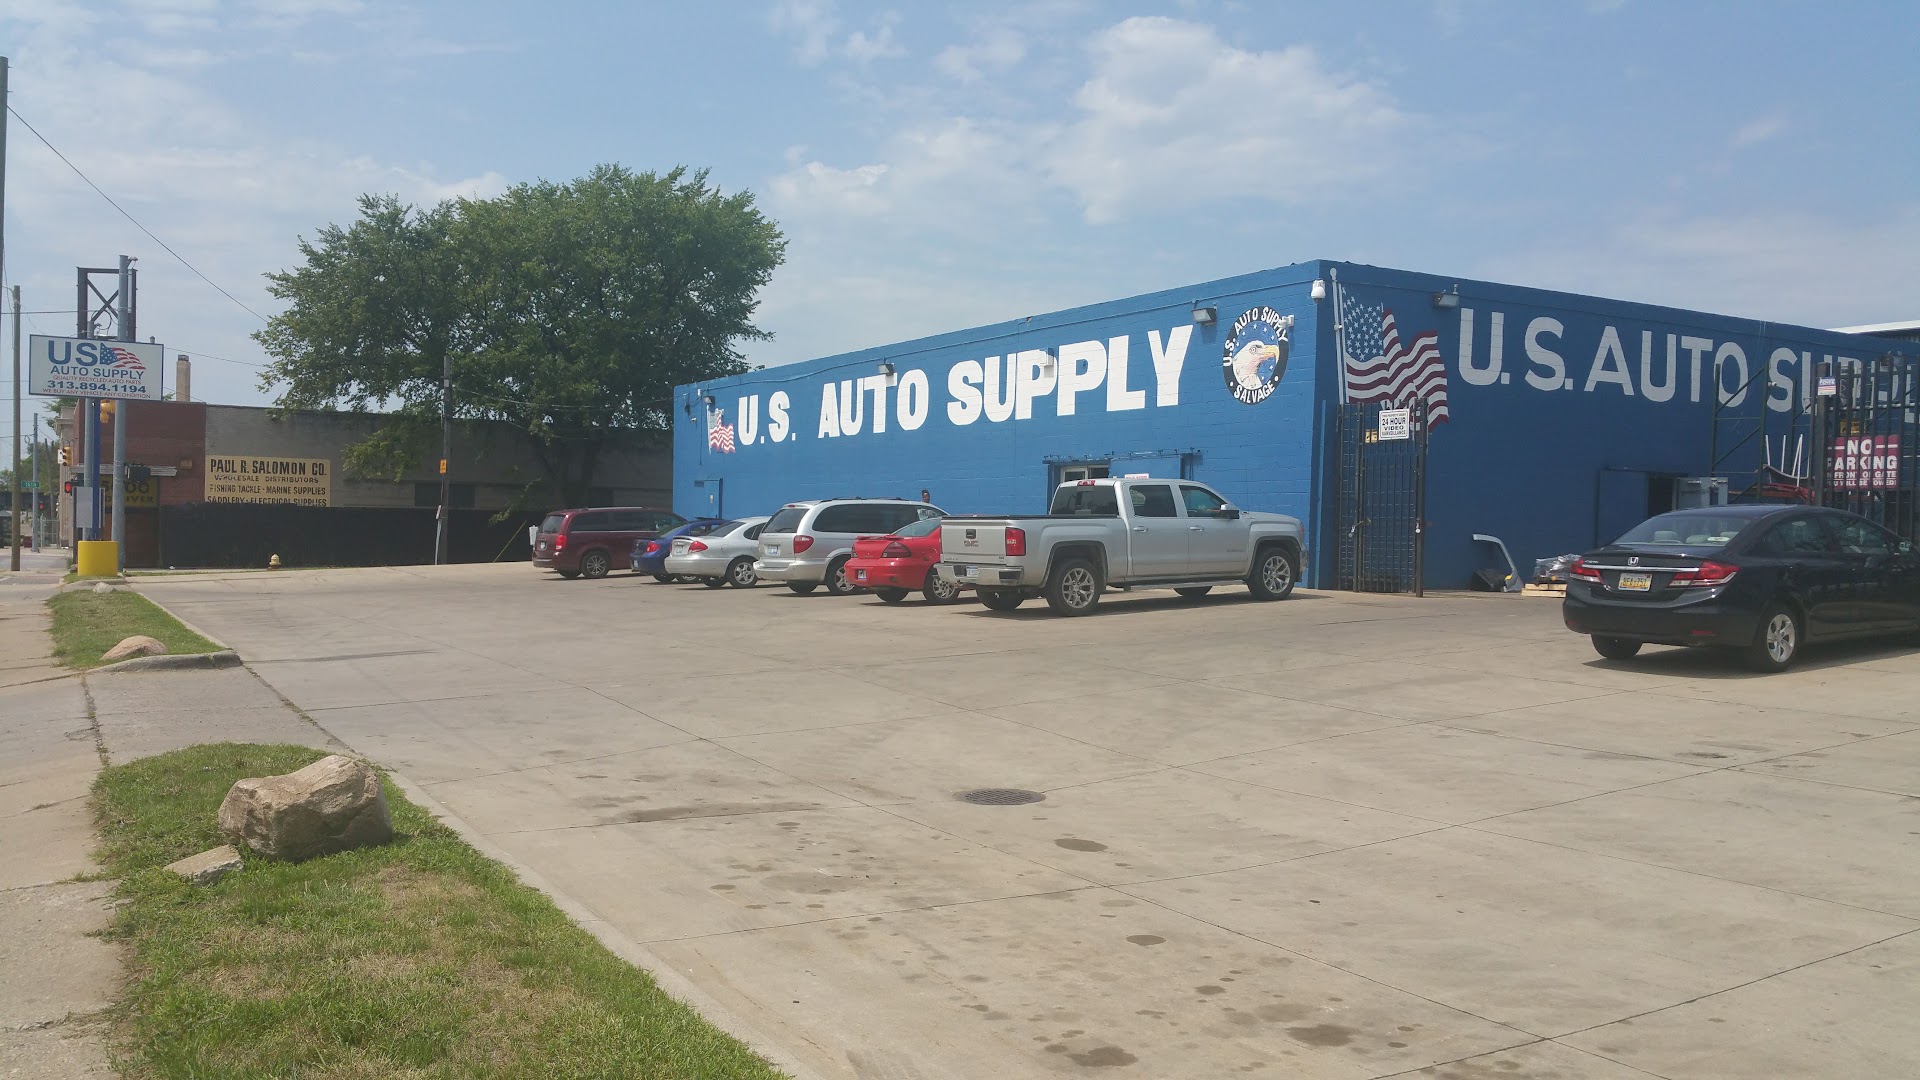 Used auto parts store In Detroit MI 